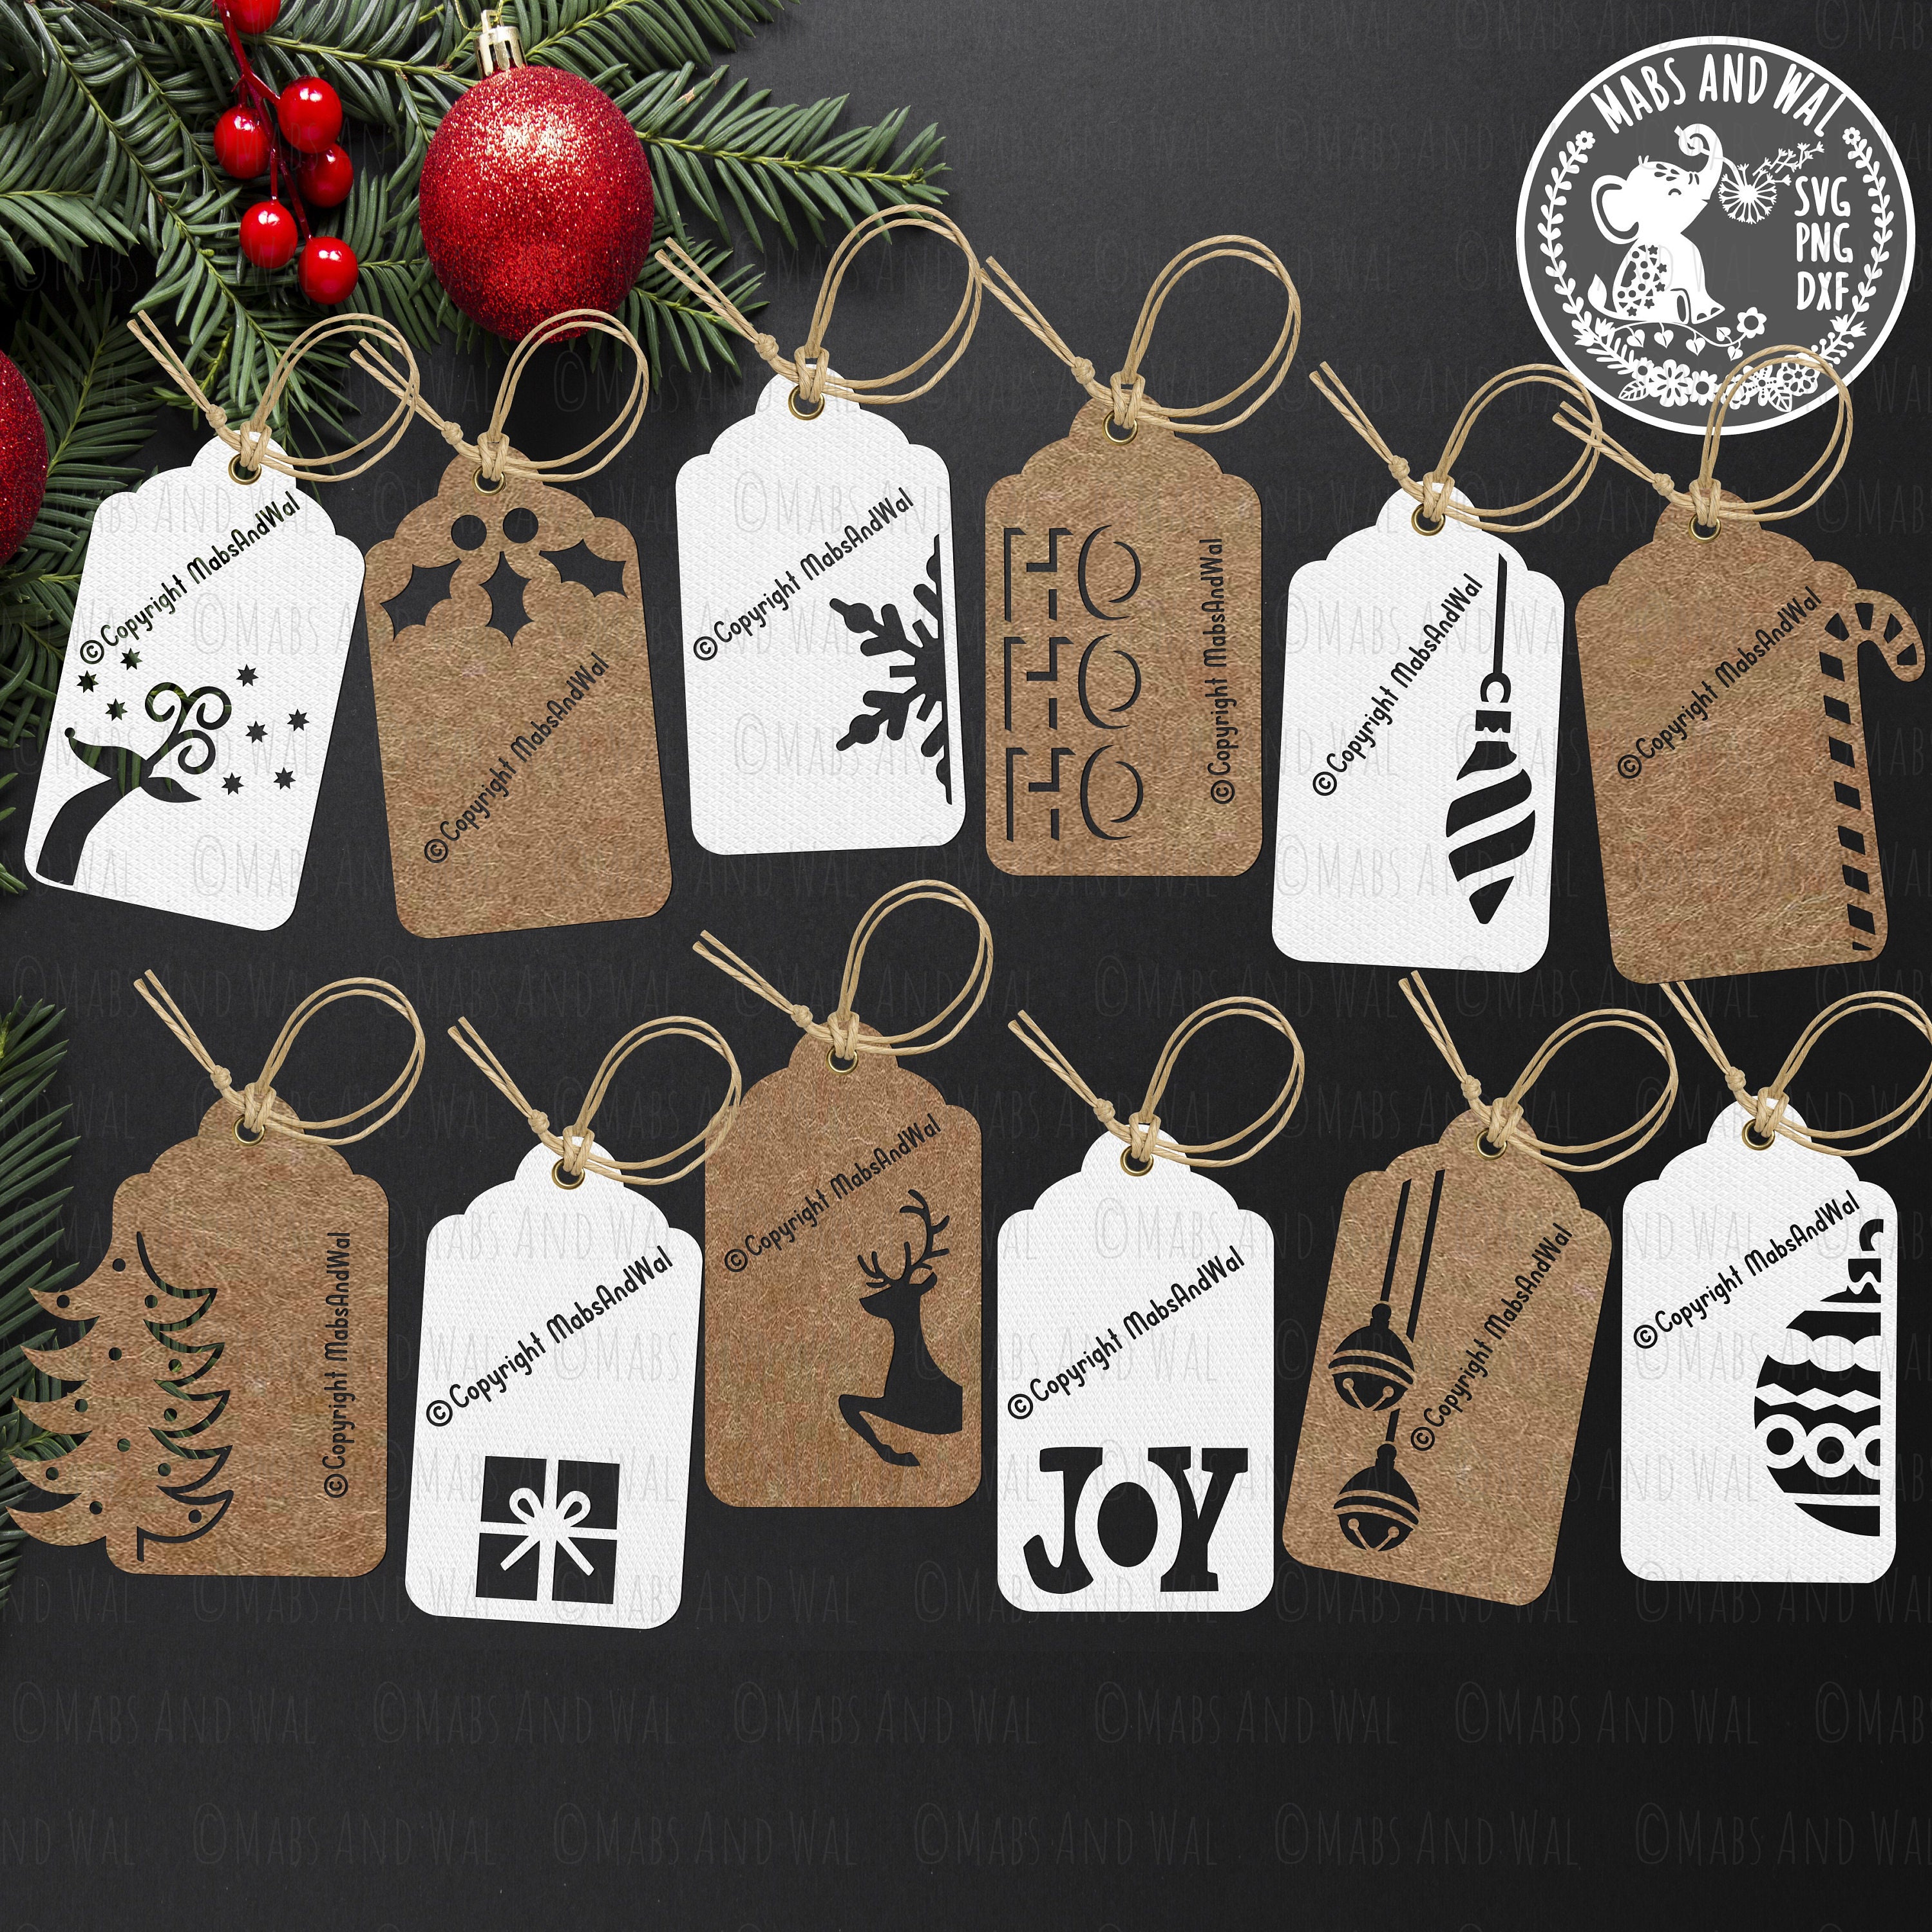 Christmas Personalized Gift Tags, Modern Christmas Gift Tags